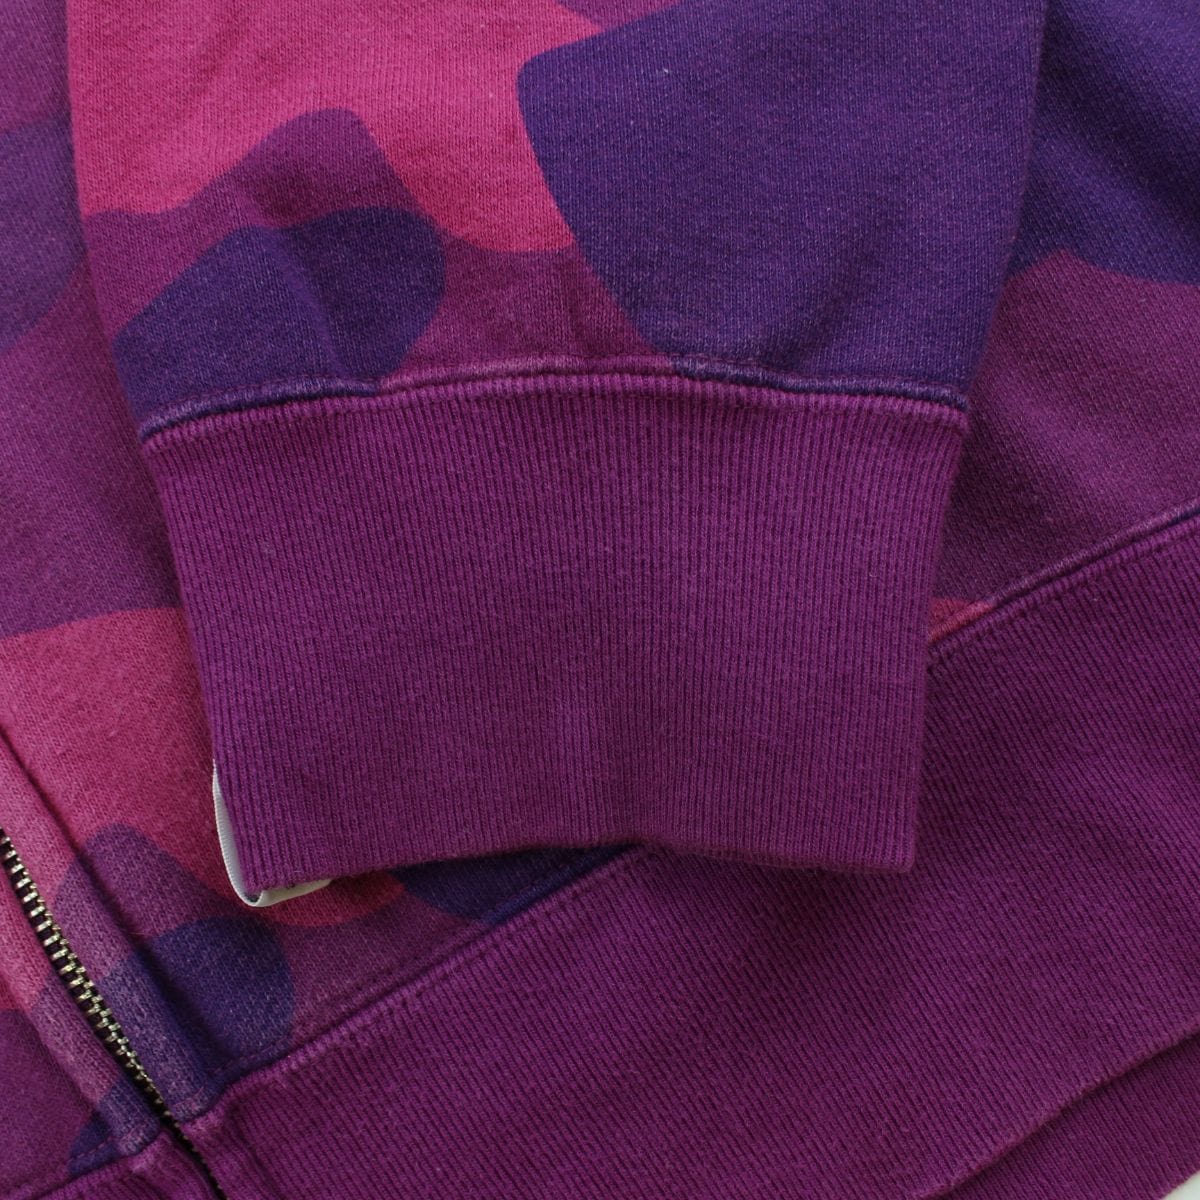 bape purple camo full zip - SaruGeneral